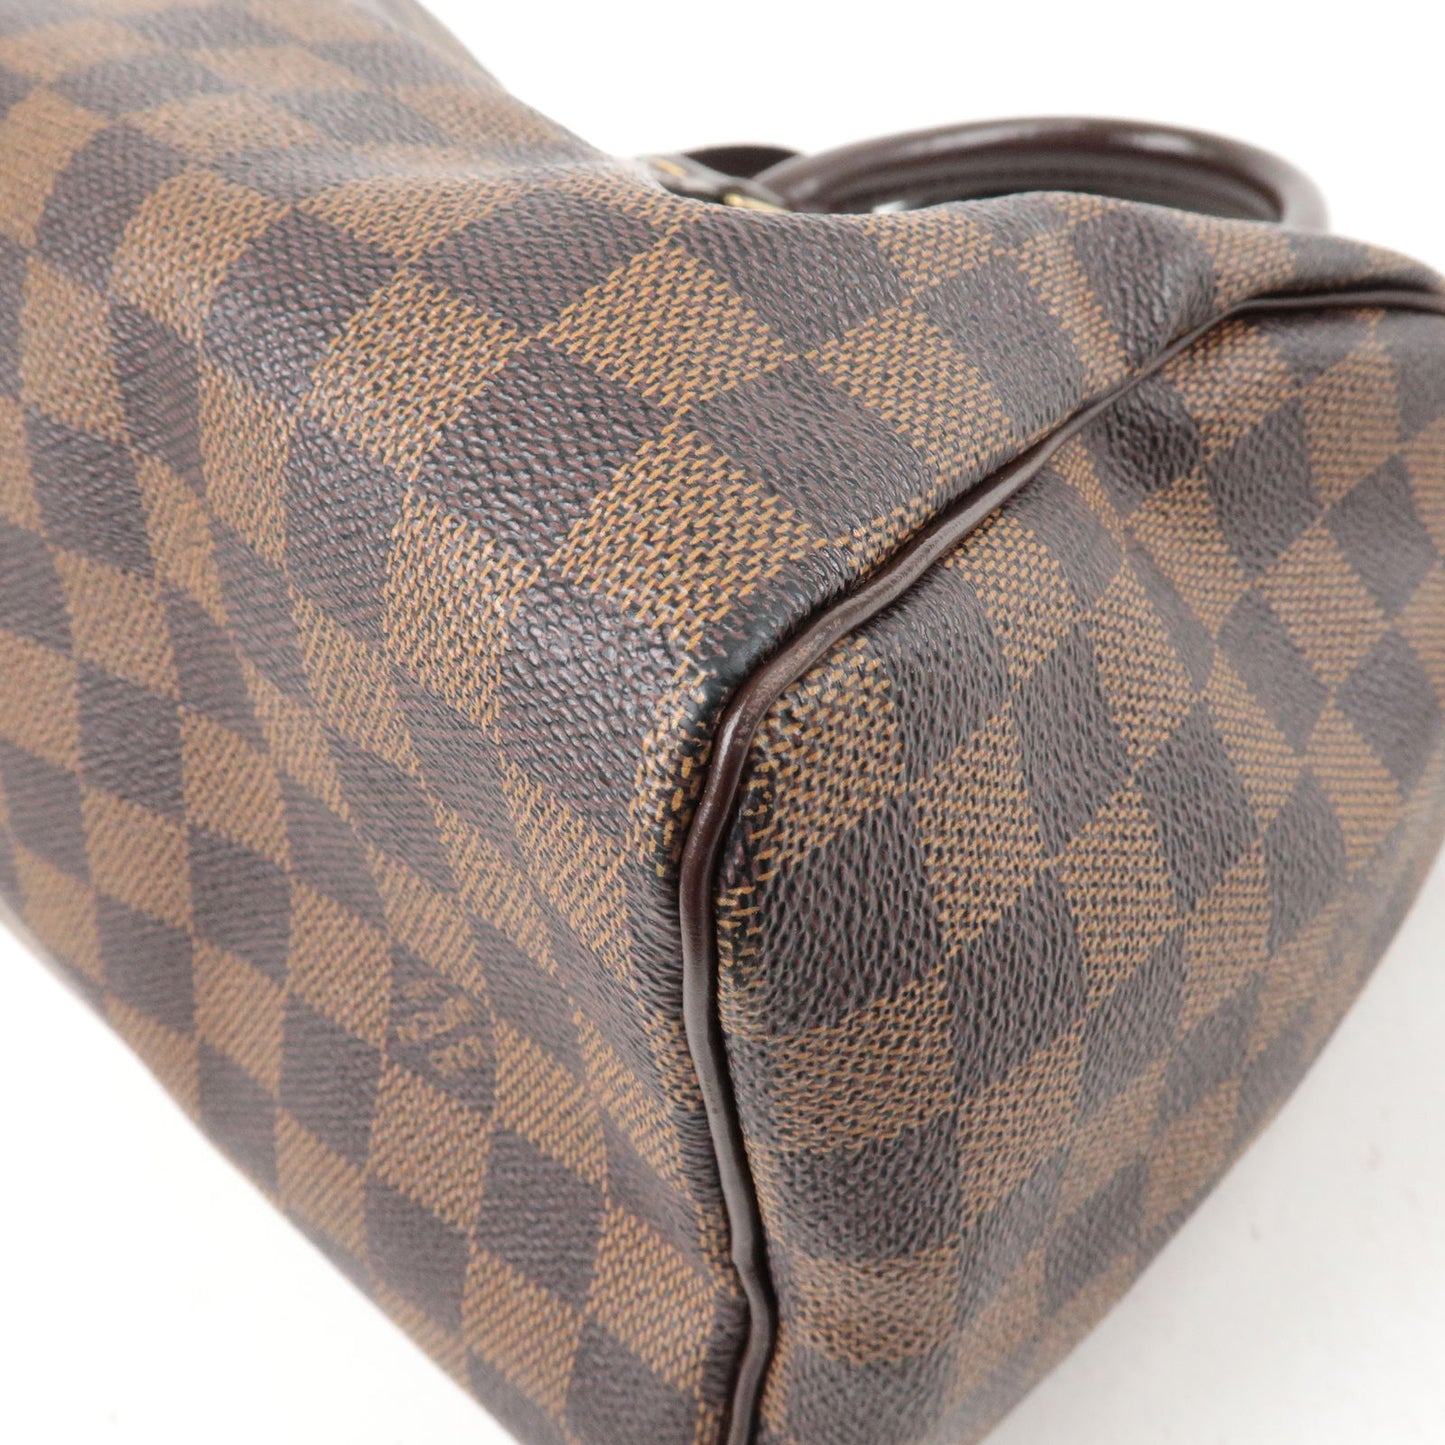 Vuitton - Bag - Bag - Speedy - Louis - N41532 – dct - Boston - 25